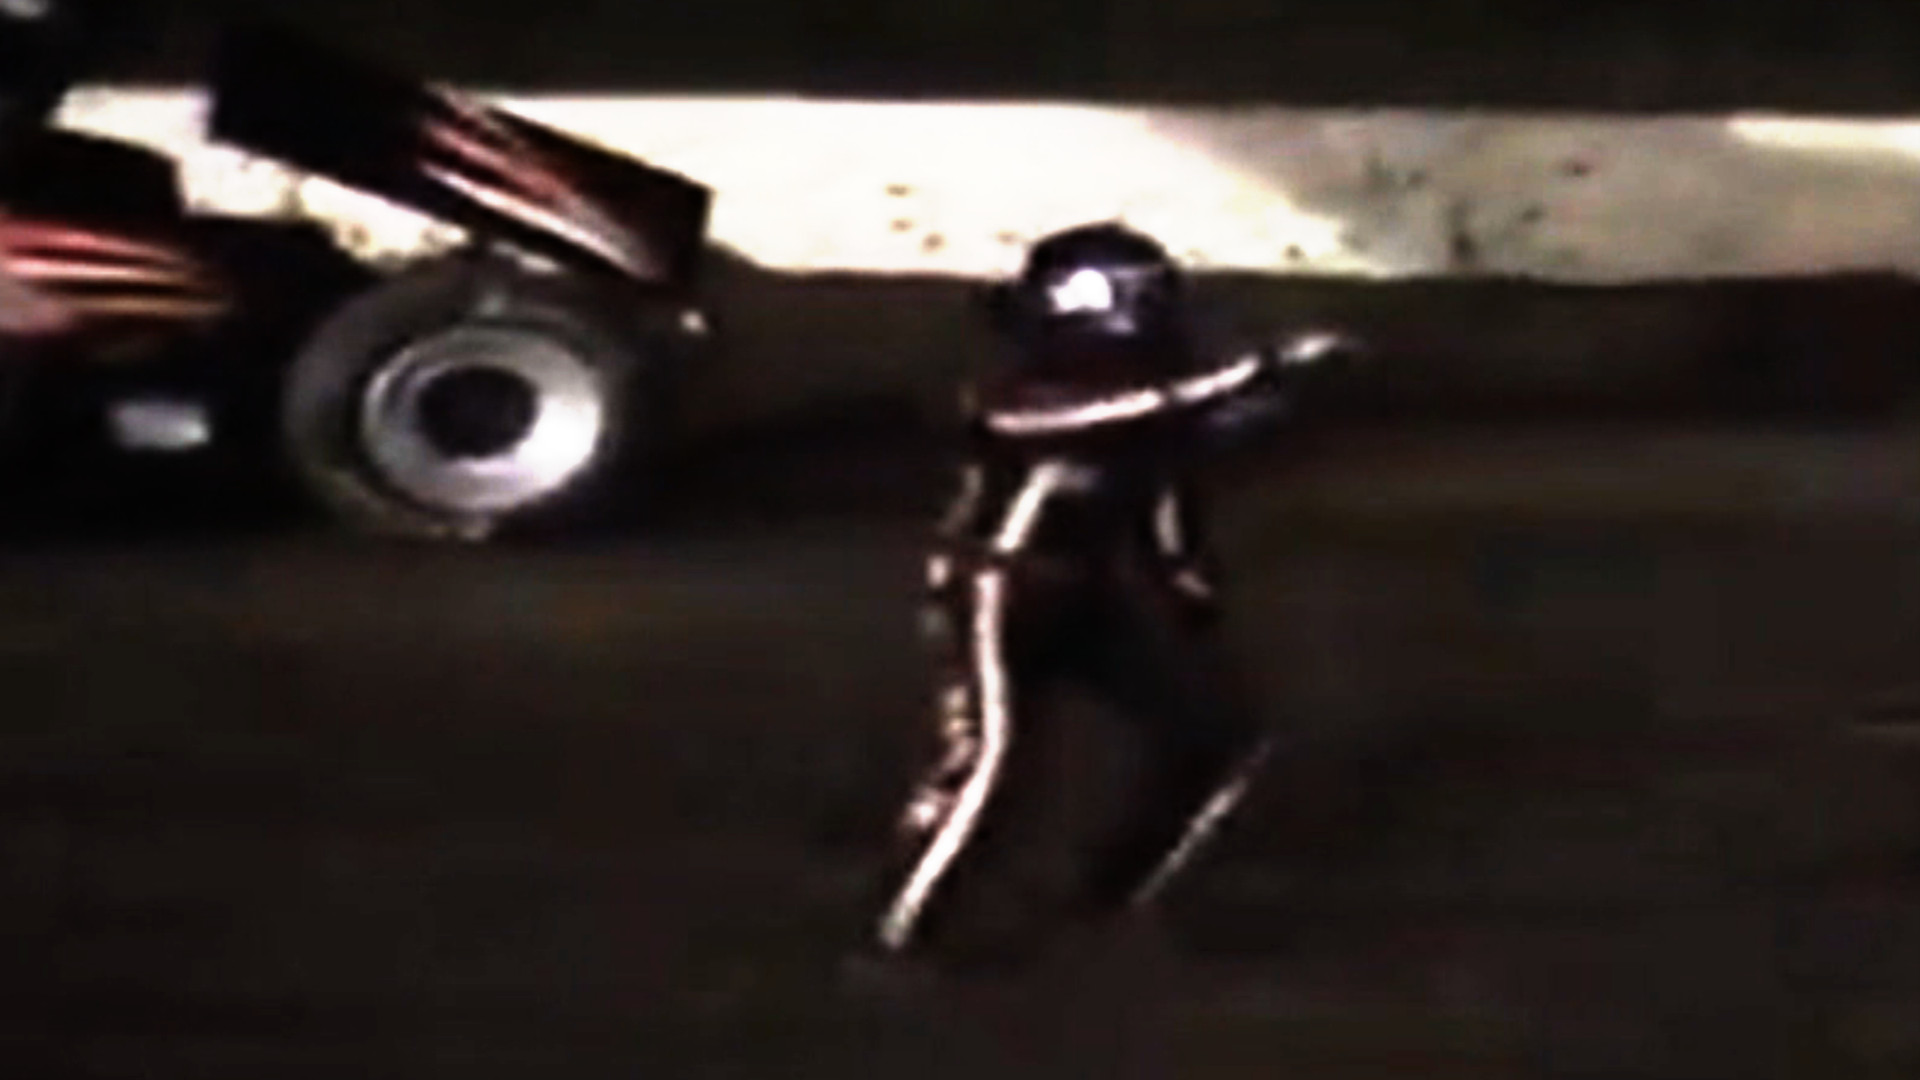 1920x1080 Cops: Tony Stewart hit and killed driver